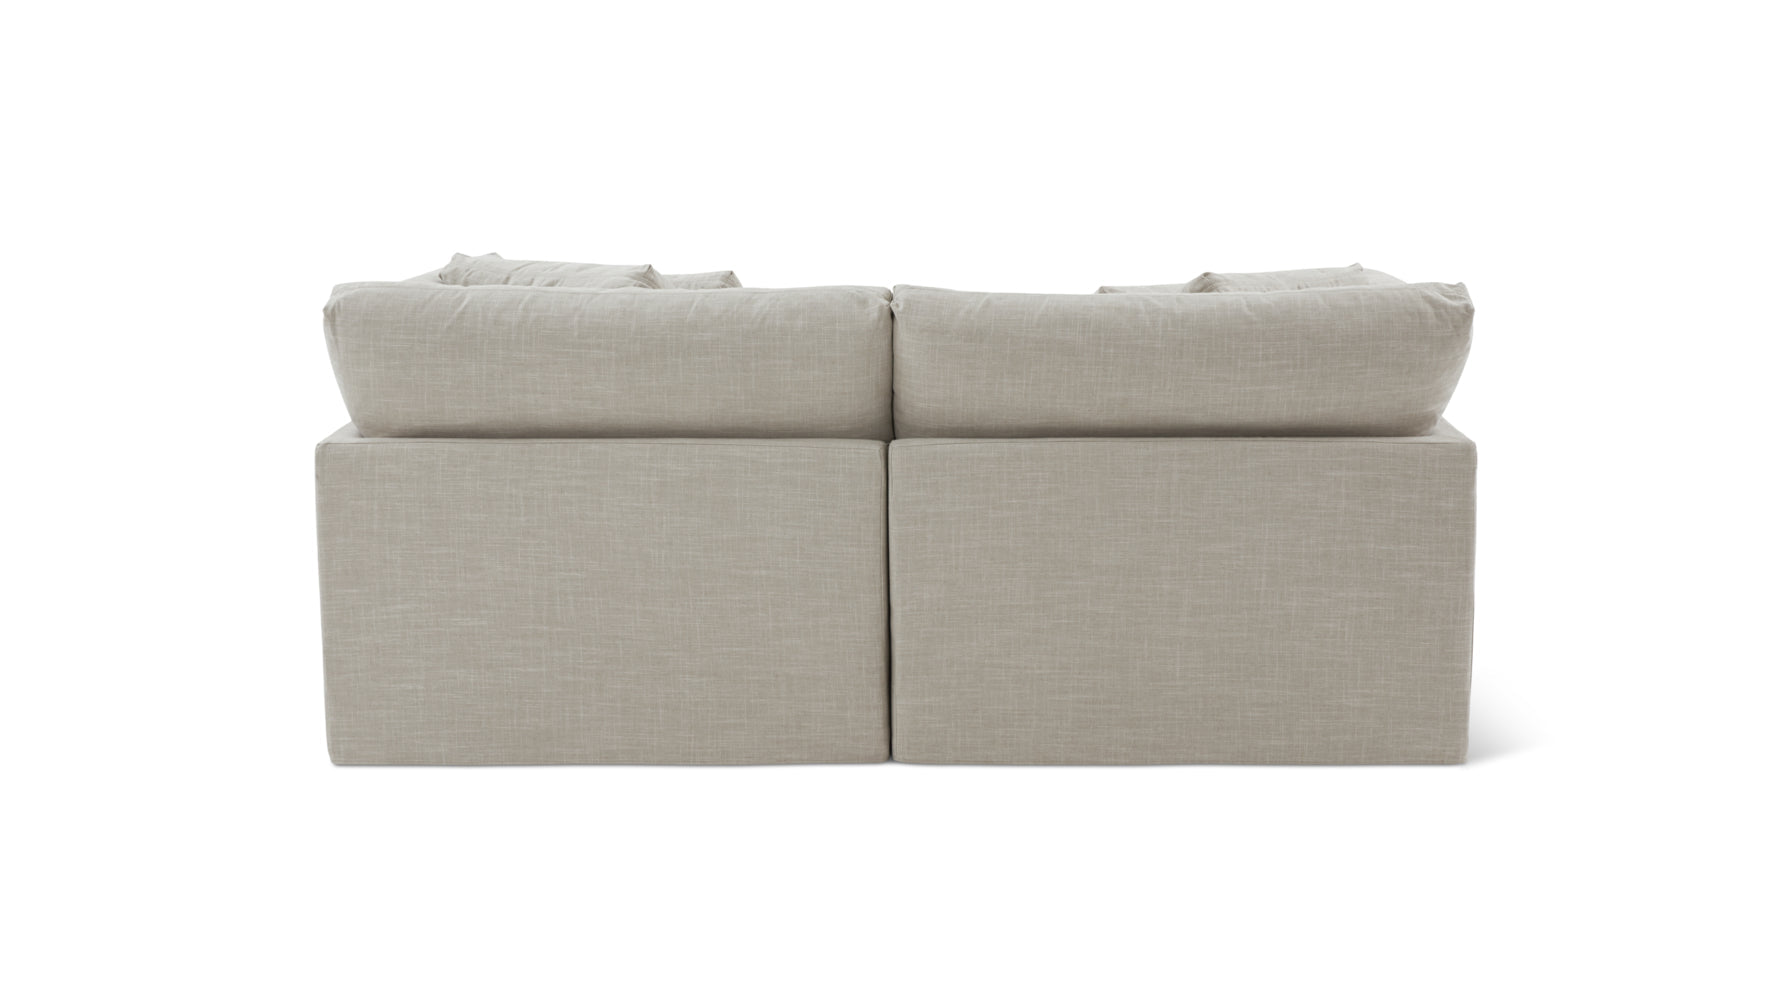 Get Together™ 2-Piece Modular Sofa, Large, Light Pebble - Image 7